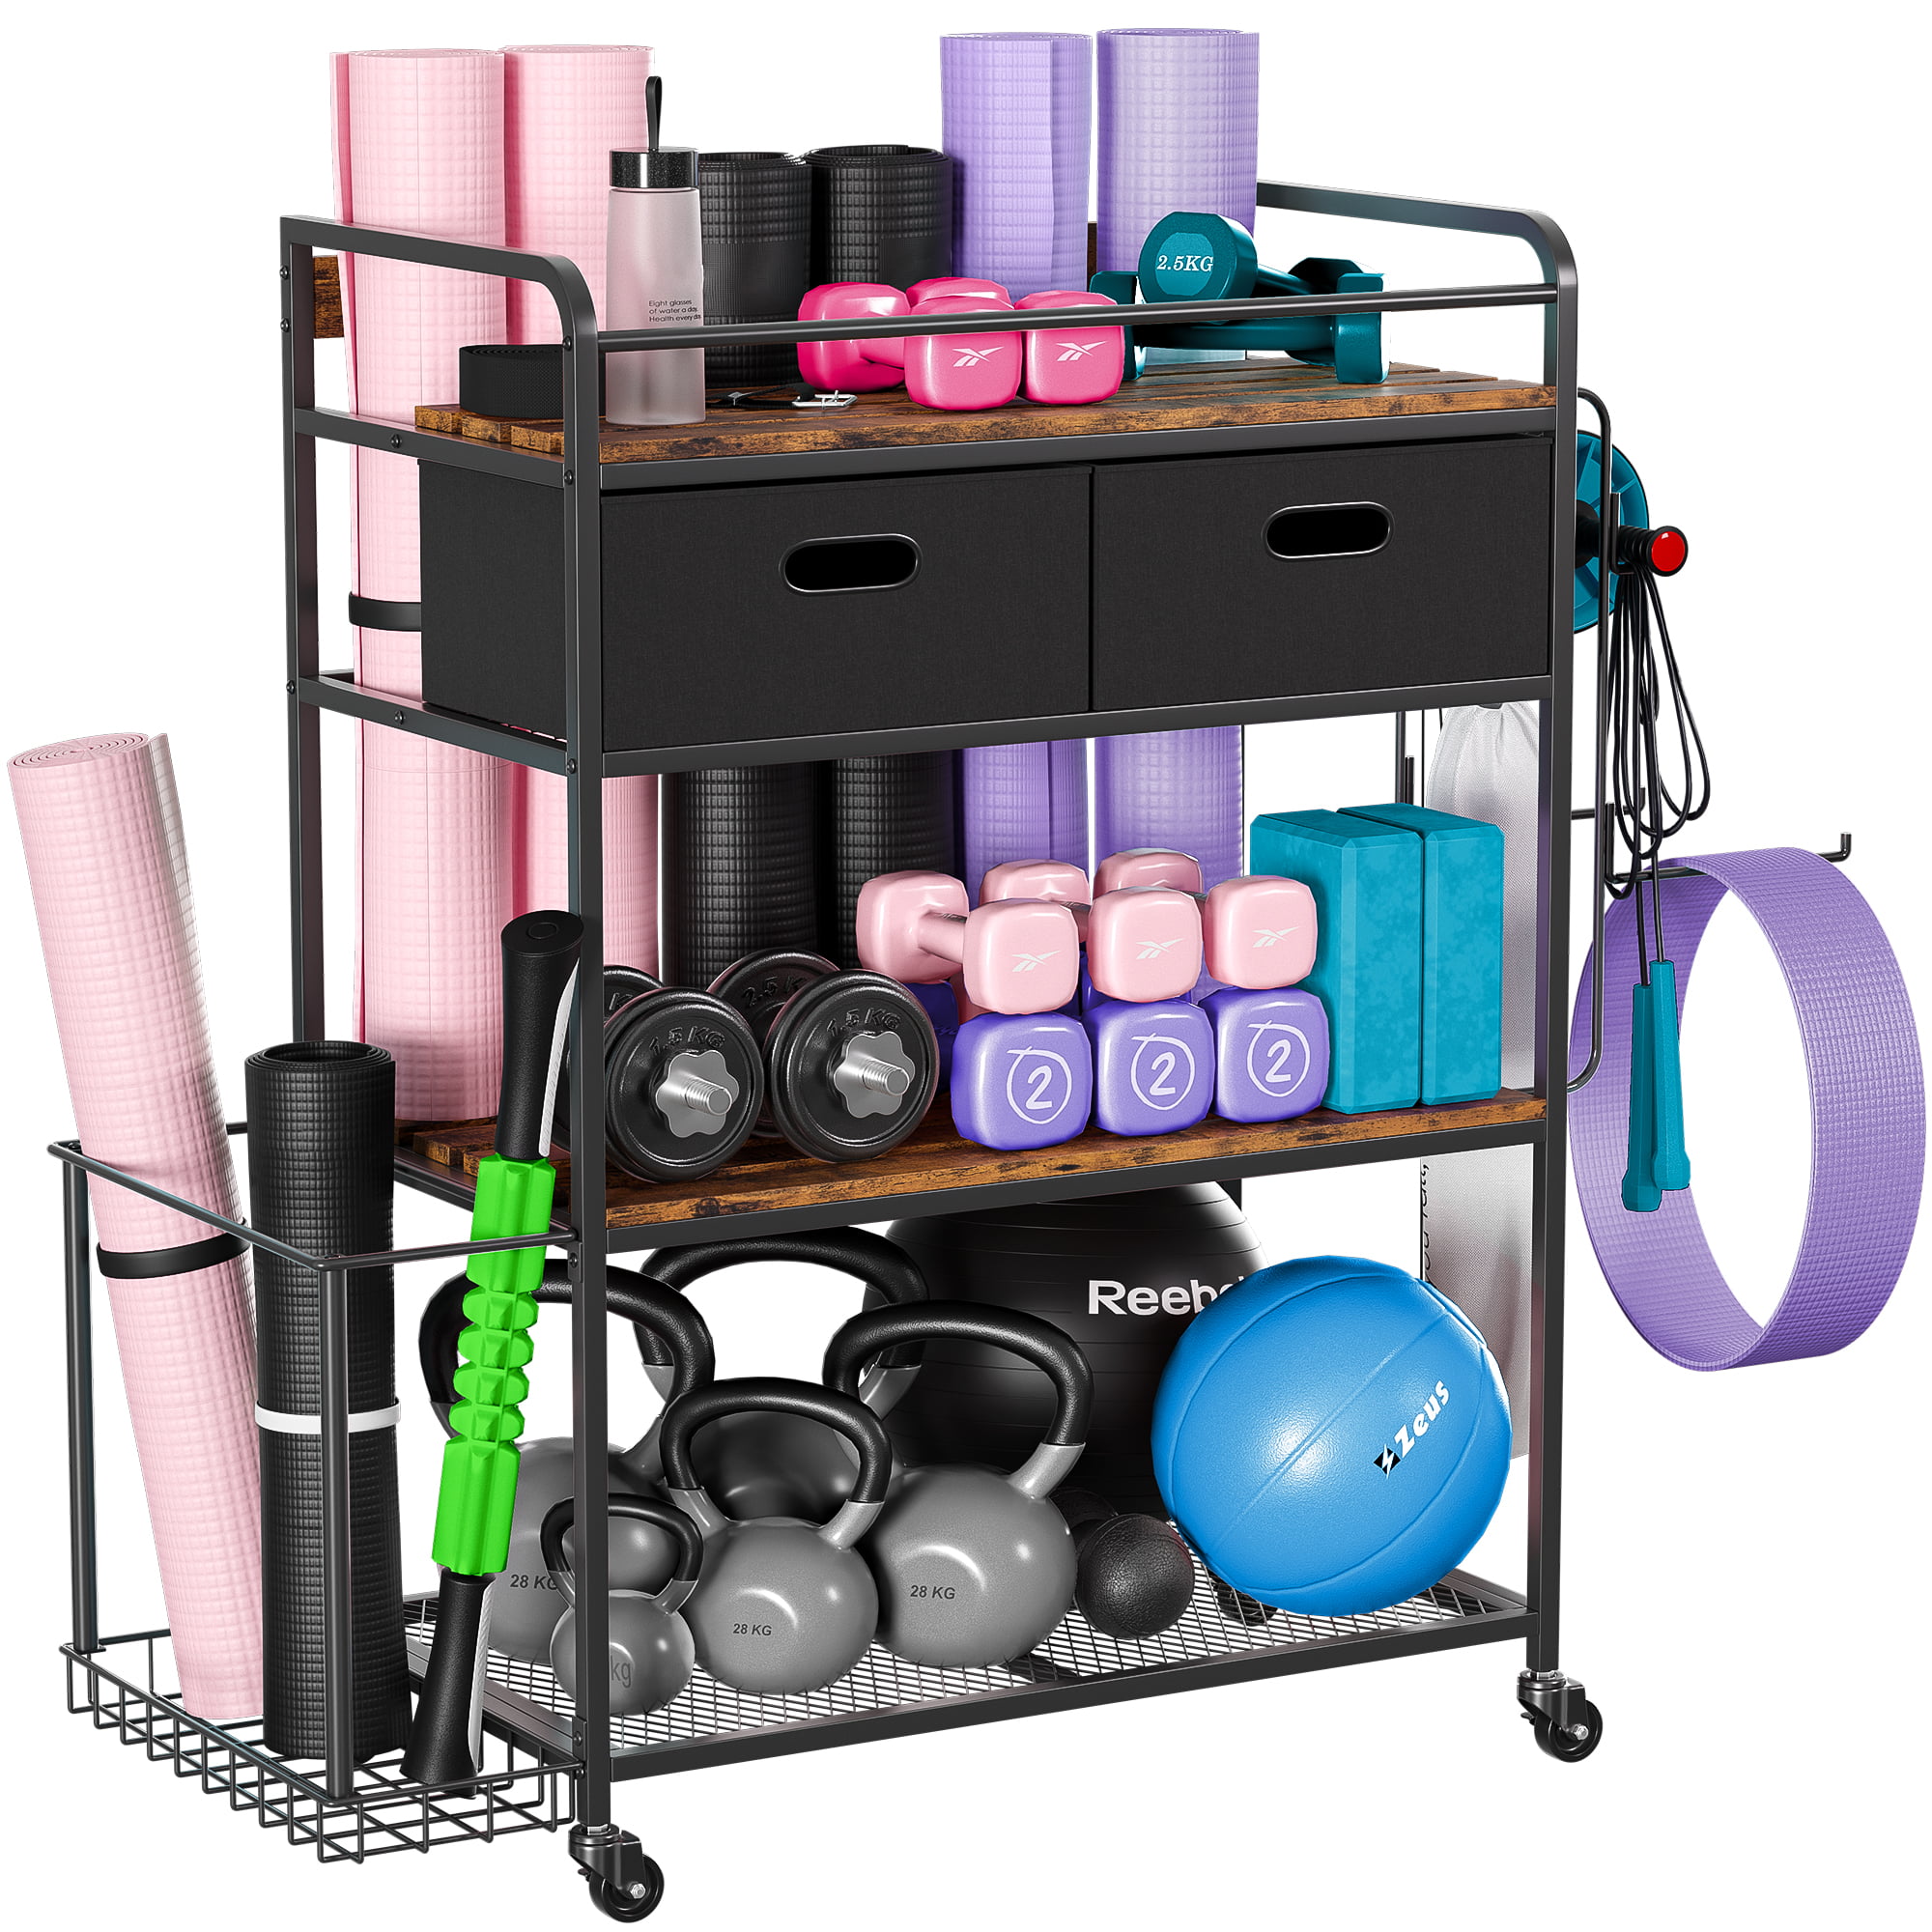 LTMATE 220 lbs. Yoga Mat Storage Racks Gym Sports Equipment Storage  organizer With Black Finish HDM731DM - The Home Depot